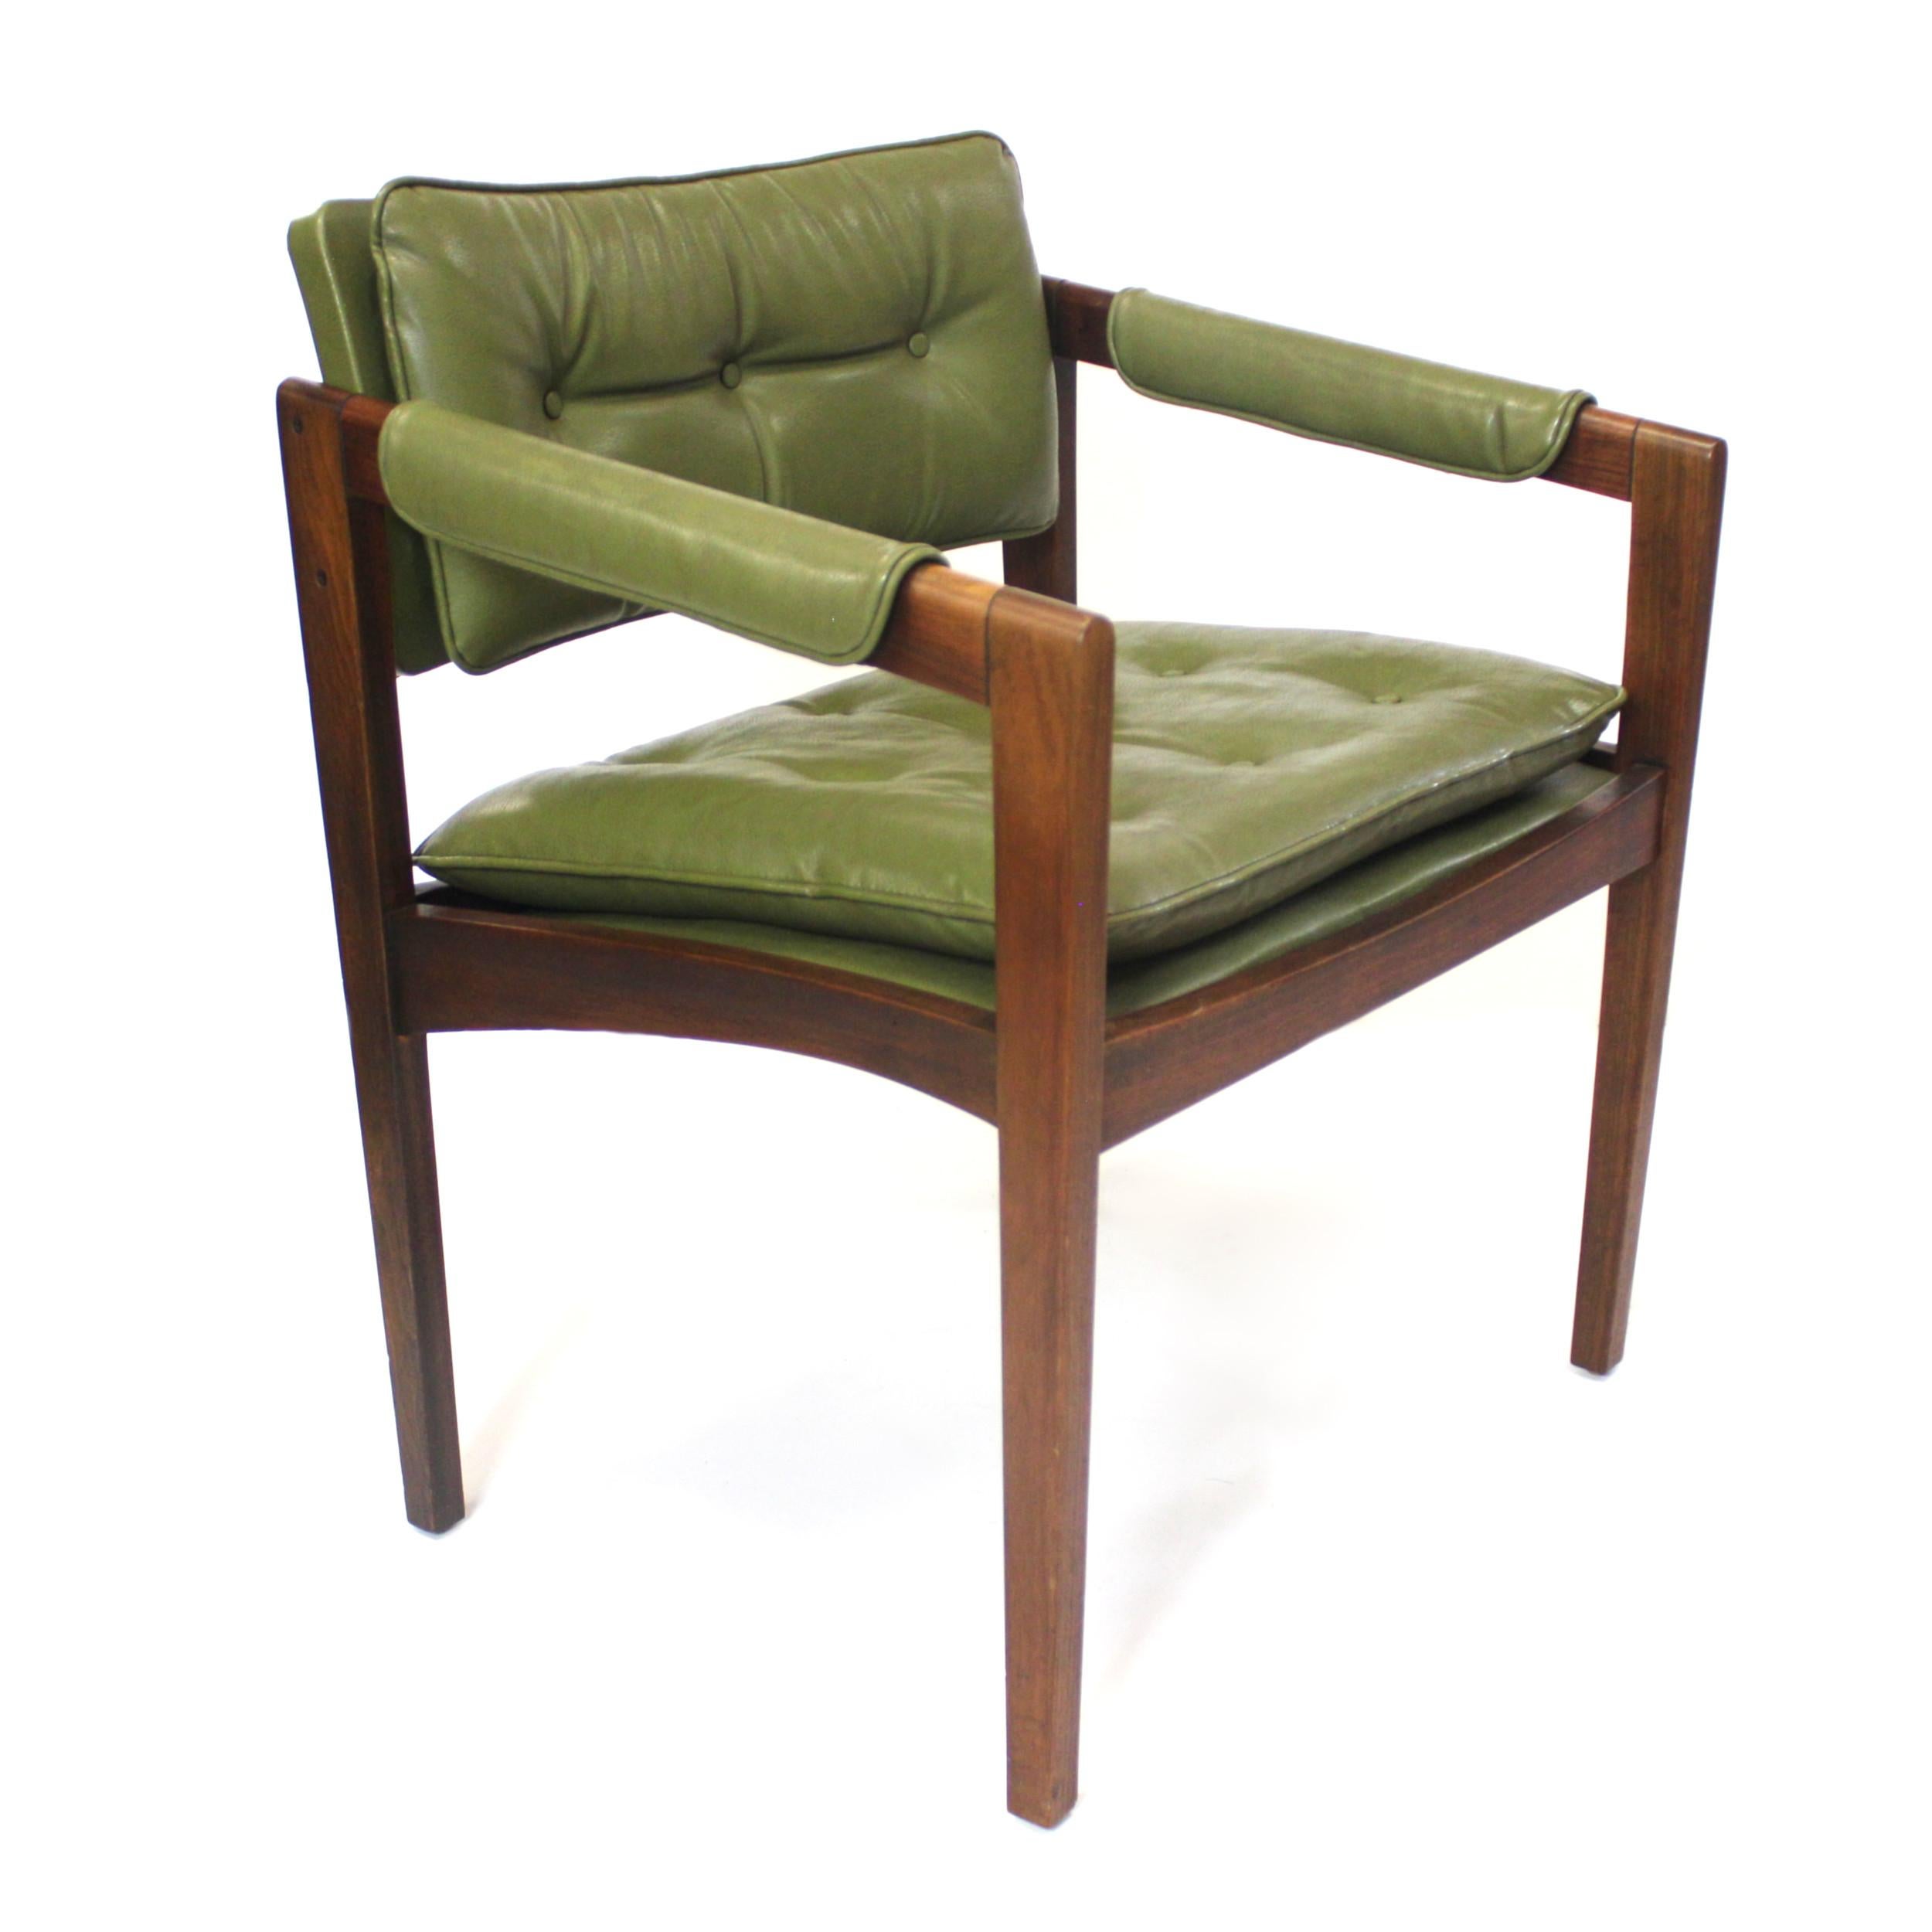 Walnut Unusual Pair of Green Mid-Century Modern Lounge Chairs by Glenn of California